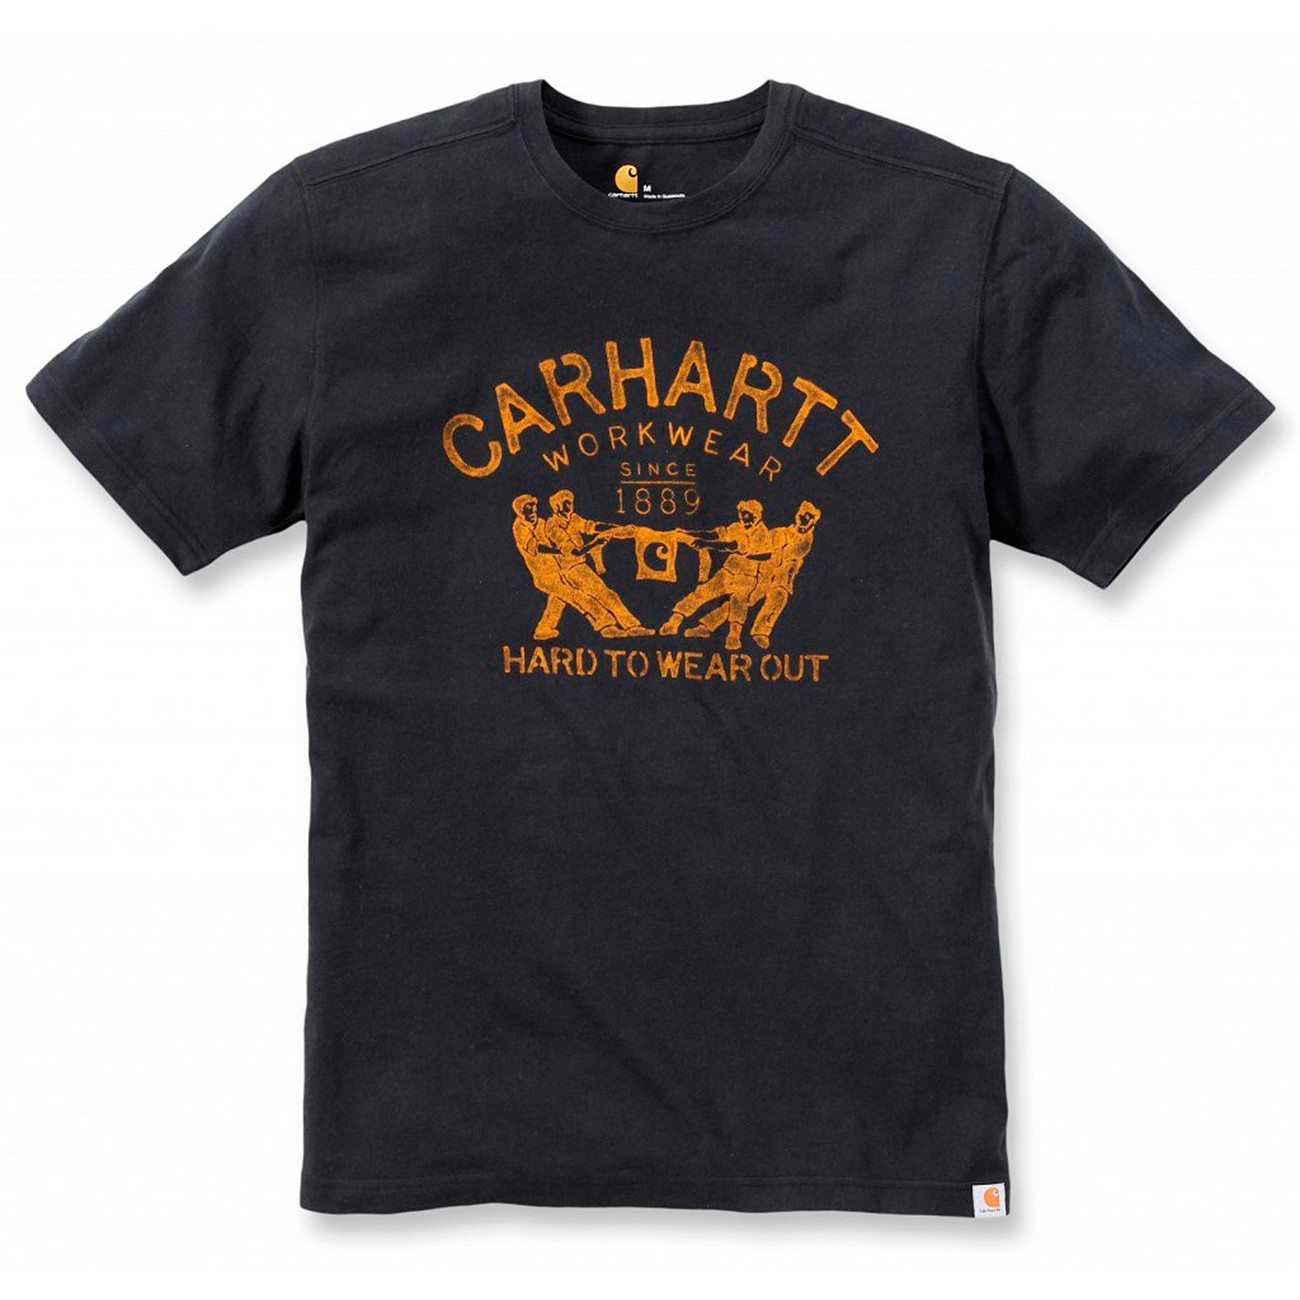 Футболка Carhartt Hard To Wear Out Graphic T-Shirt 102097 (Black)